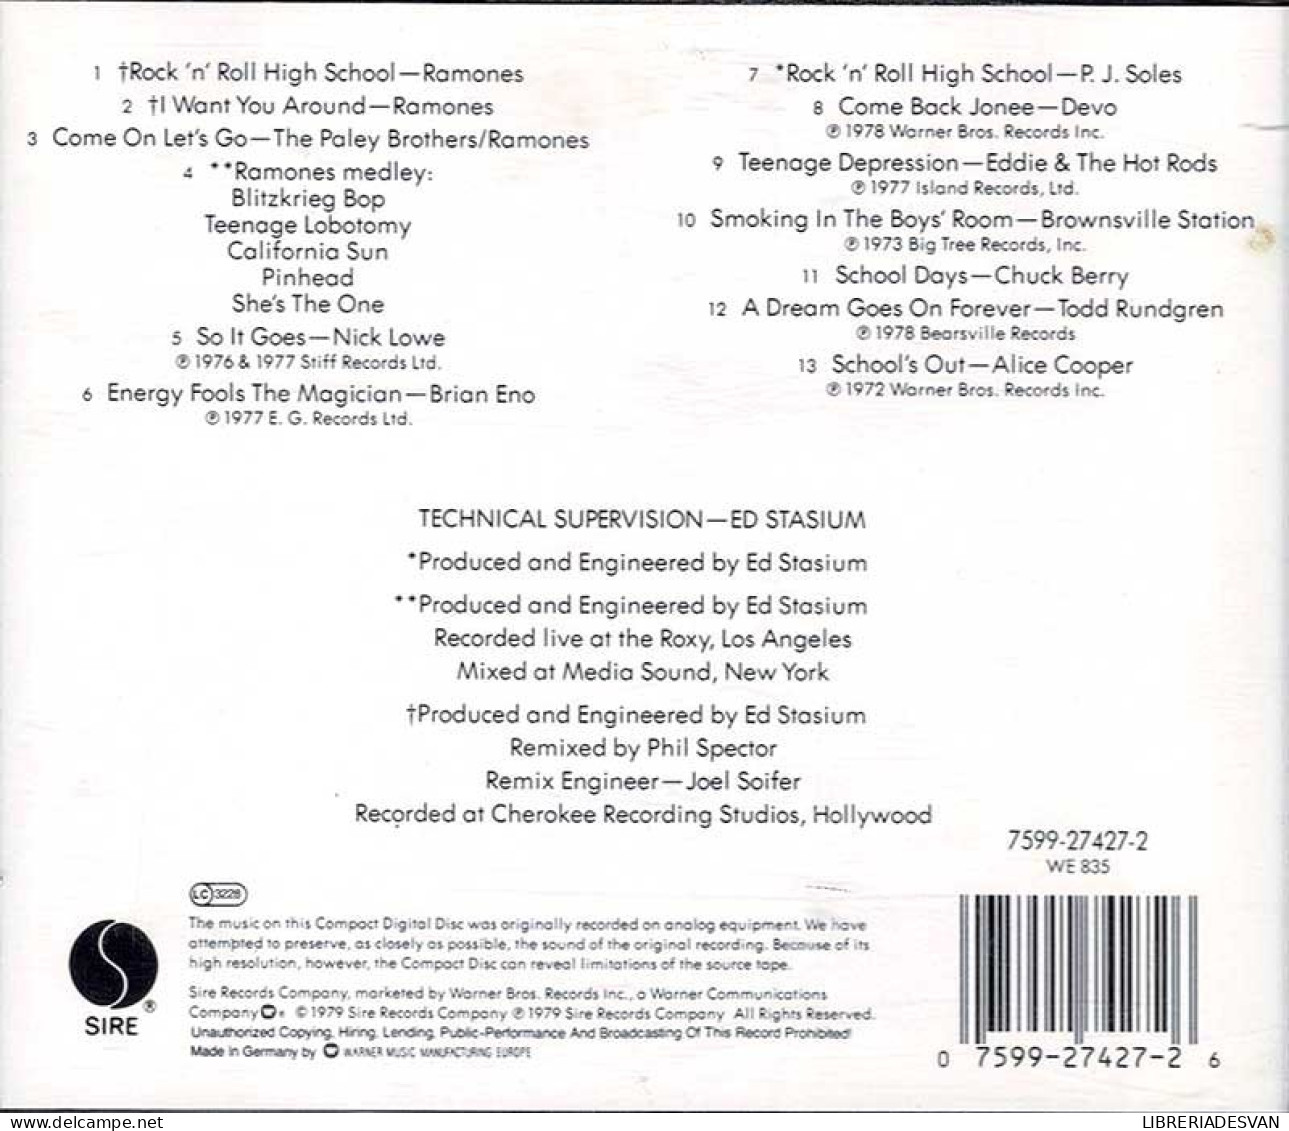 Rock 'N' Roll High School. CD - Musique De Films